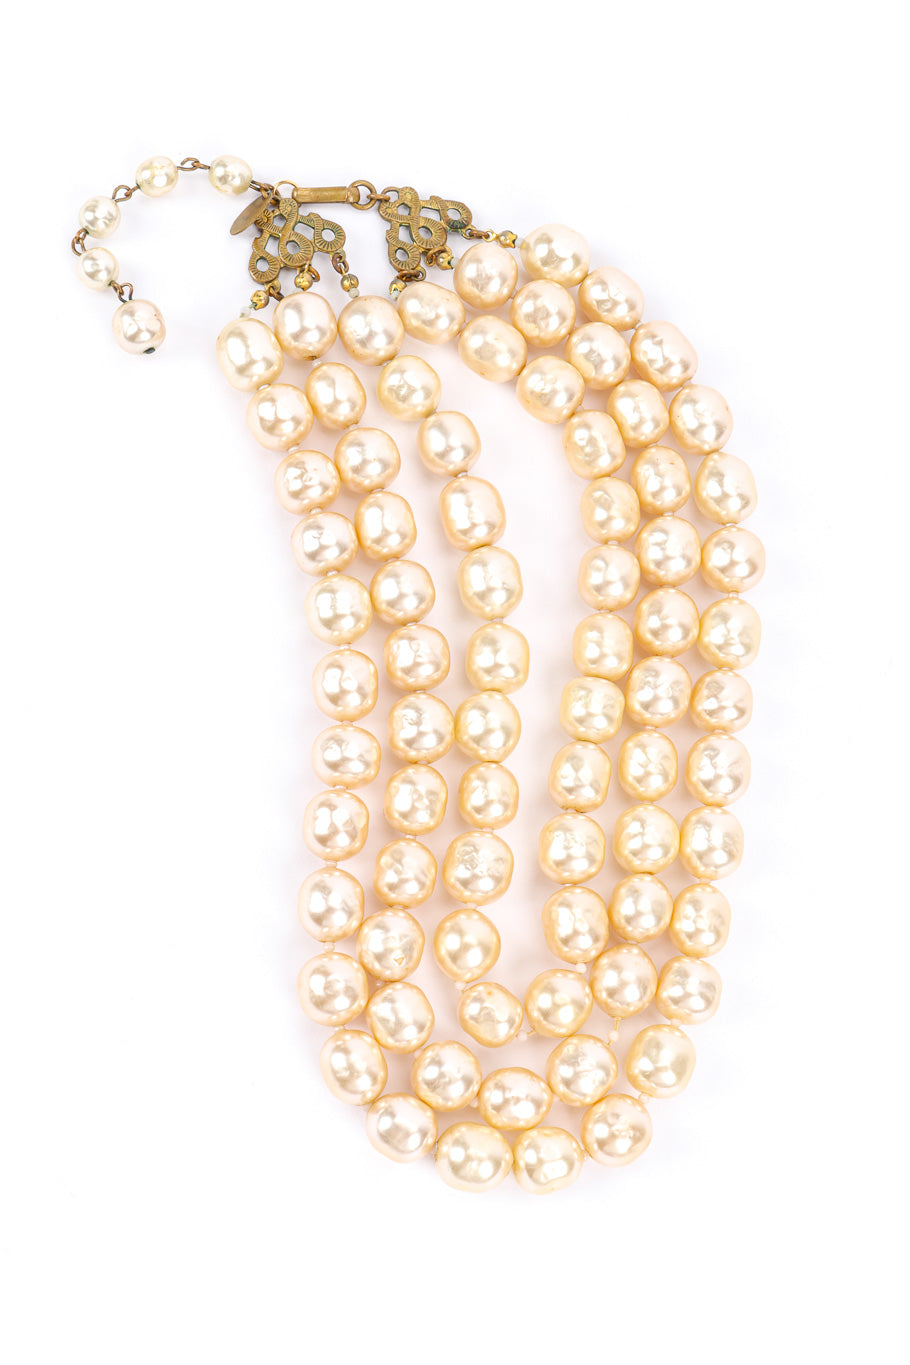 Vintage Miriam Haskell 3-Strand Pearl Collar Necklace full view closeup @recessla